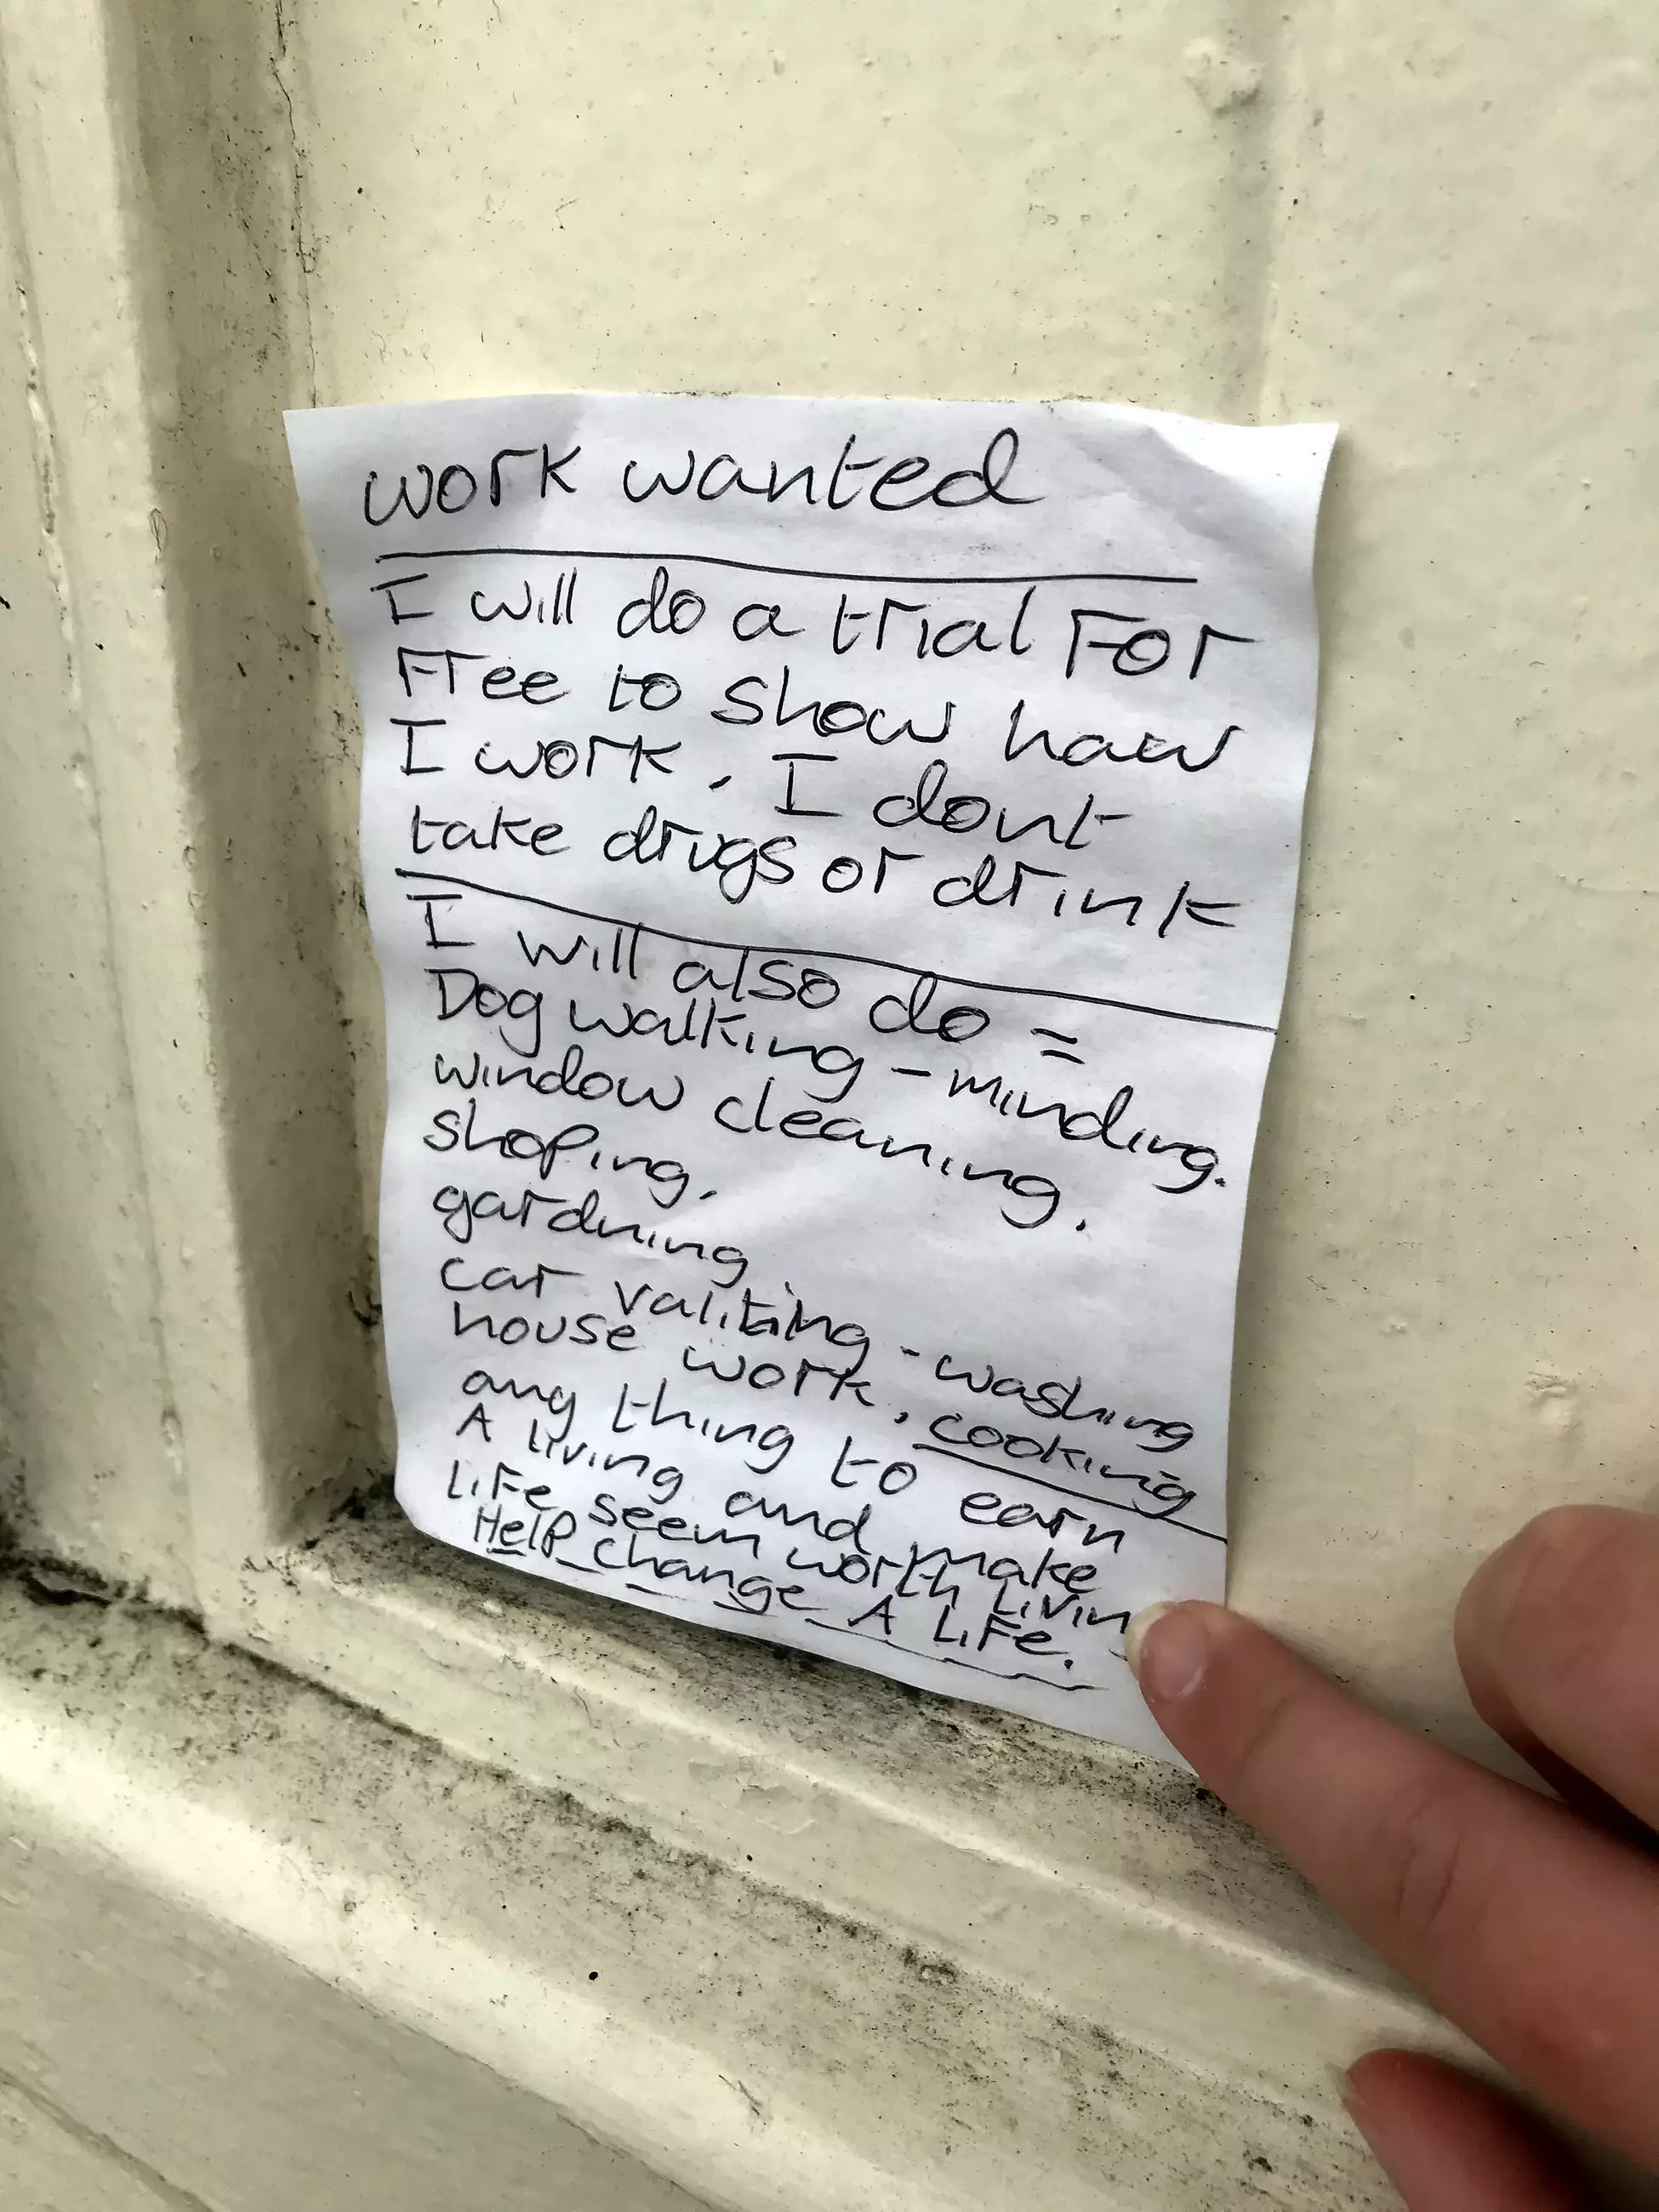 Anthony's note has been described as 'heartbreaking'.